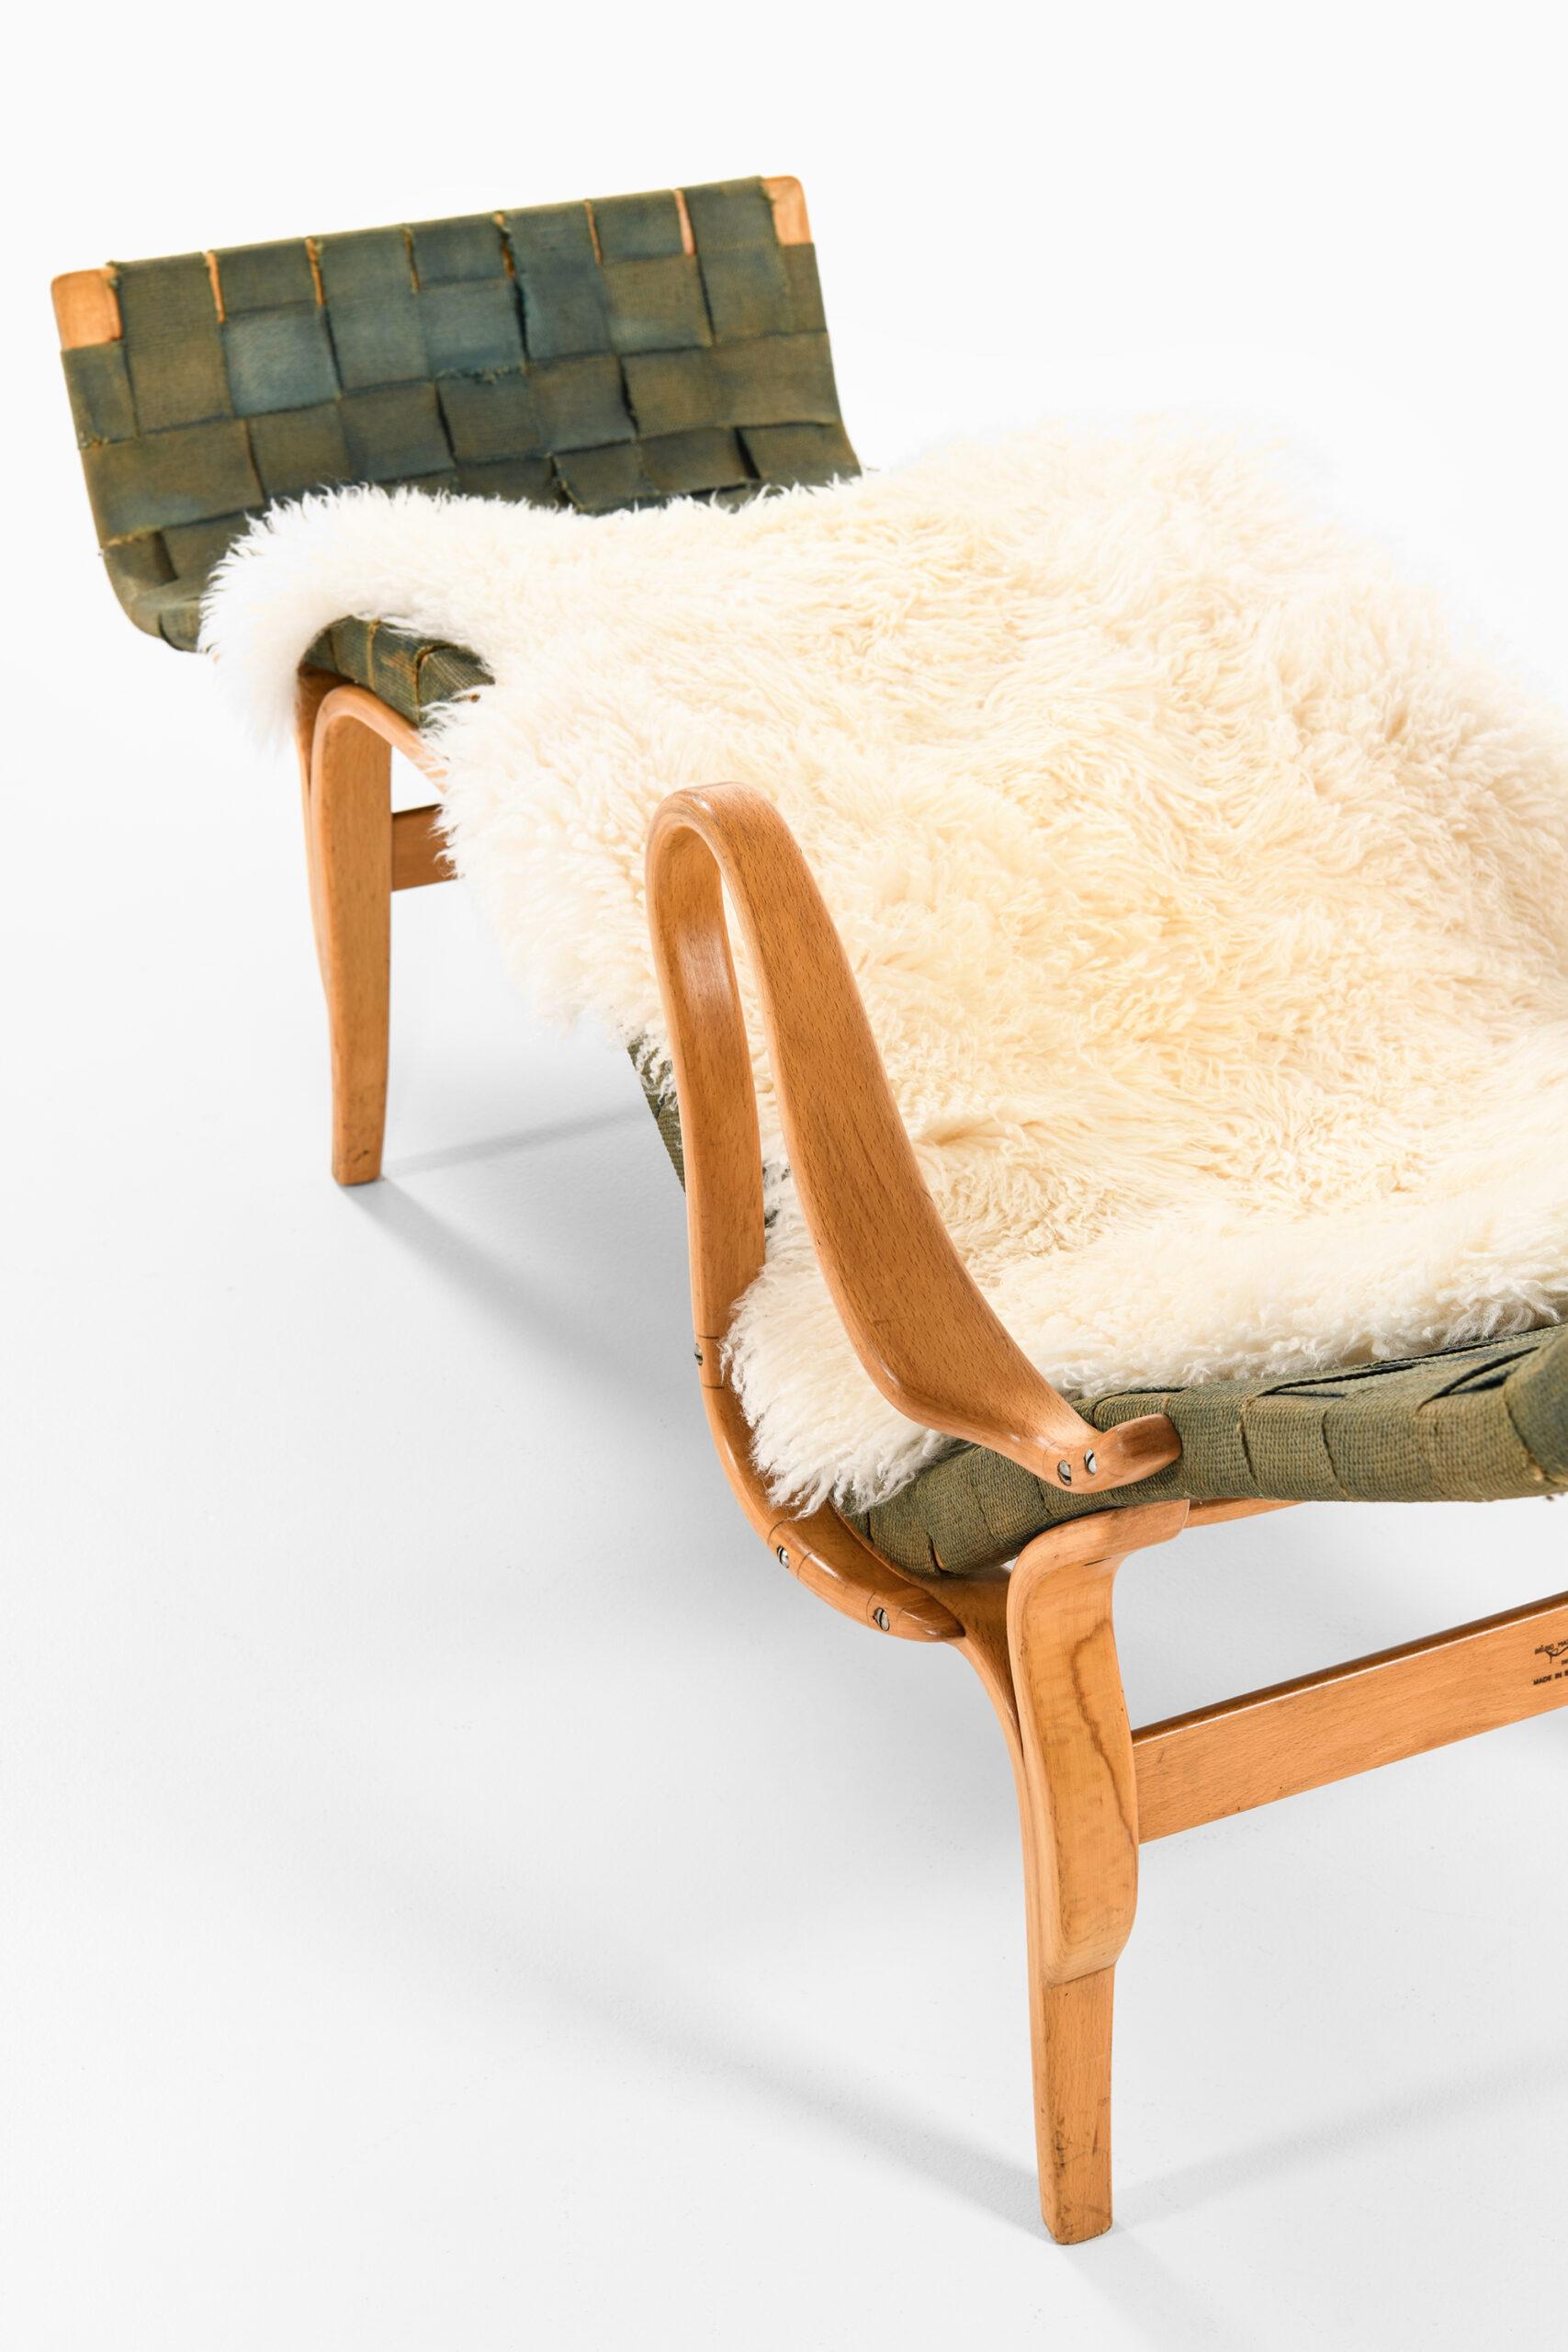 Swedish Bruno Mathsson Lounge Chair Model Pernilla 3 / T-108 by Karl Mathsson in Värnamo For Sale